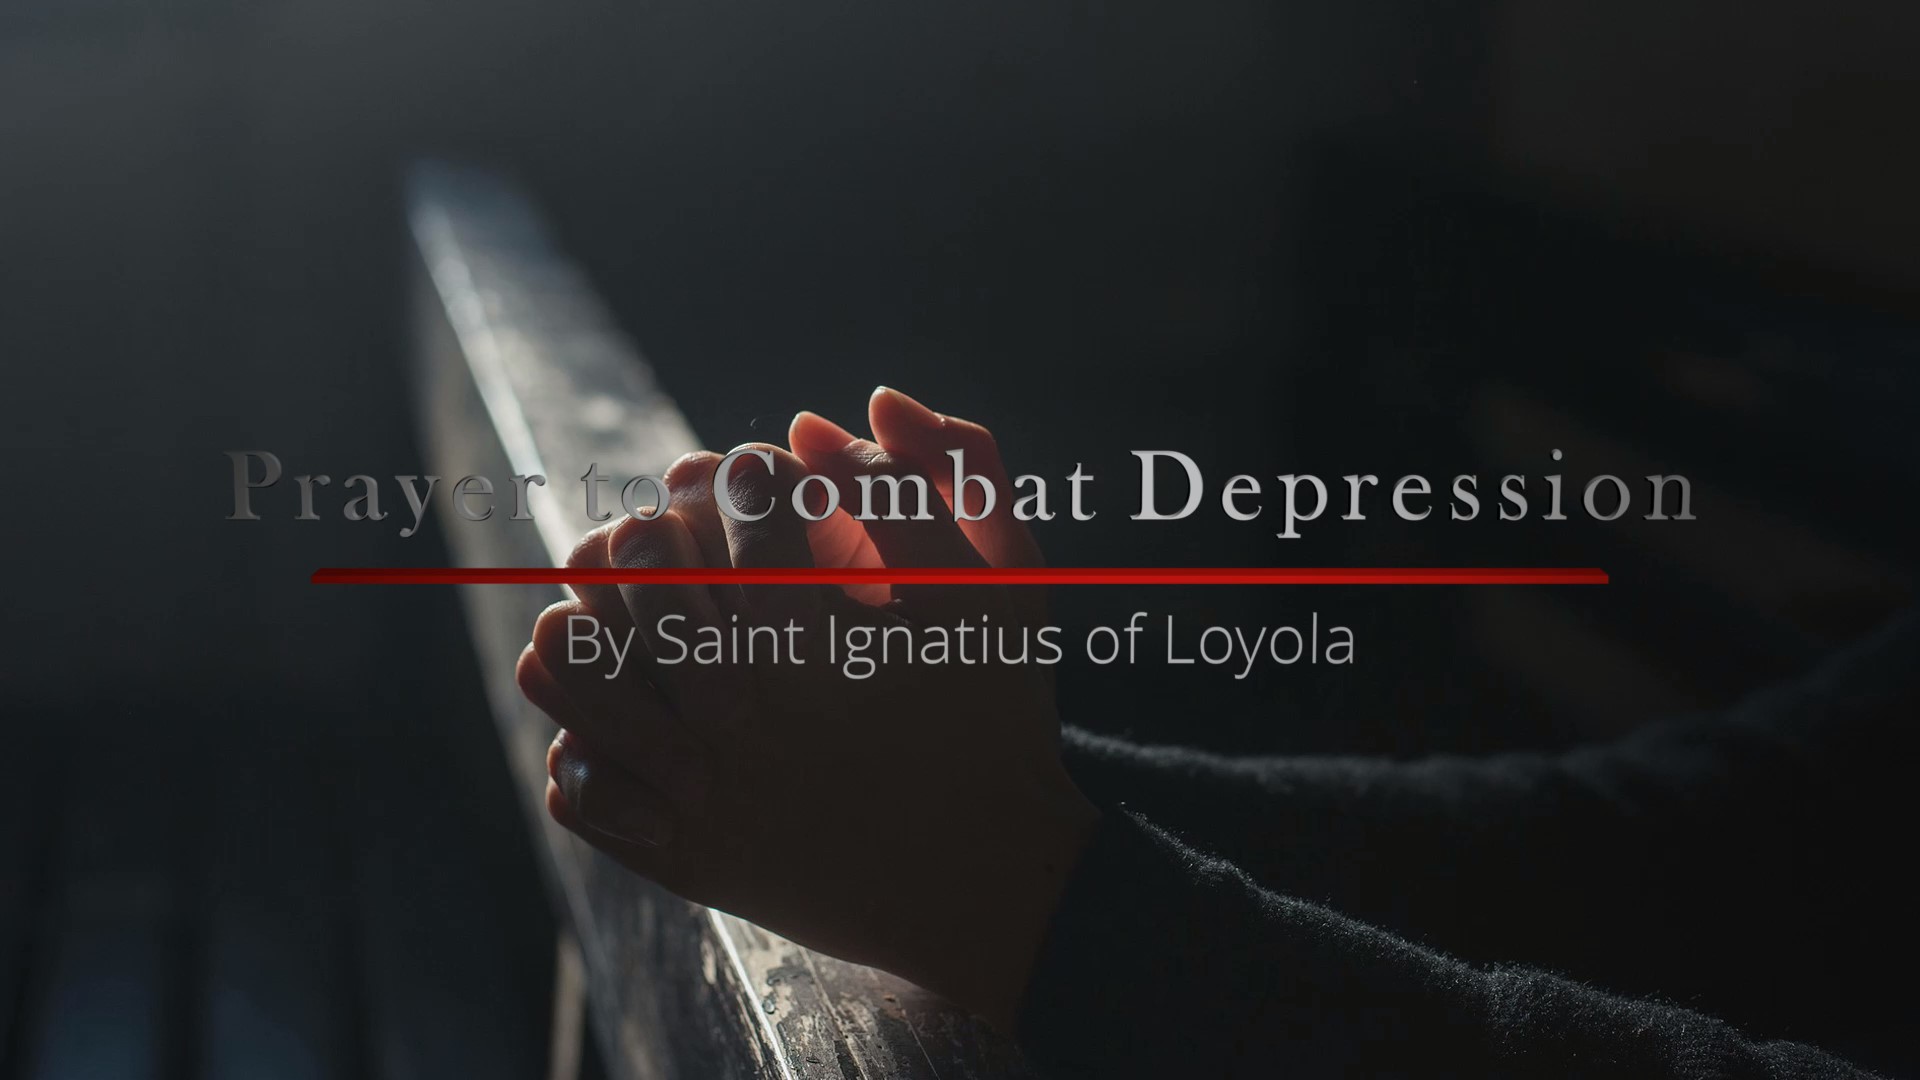 Prayer to Combat Depression